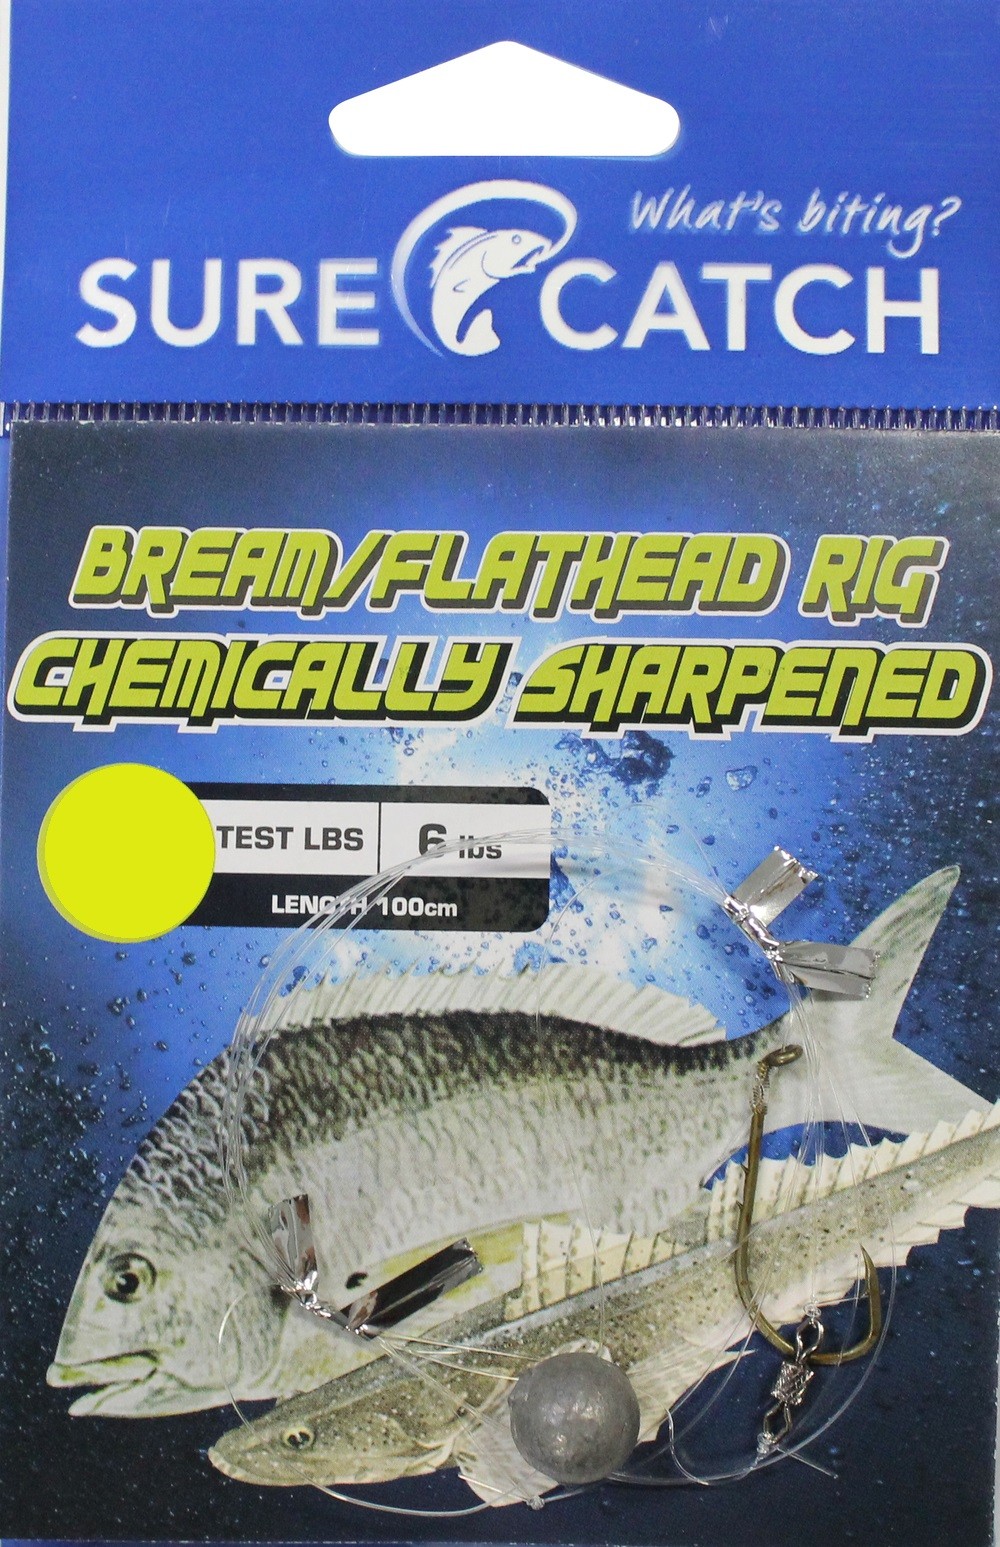 Sure Catch Bream & Flathead Rig Chem/Sharp - Size 4